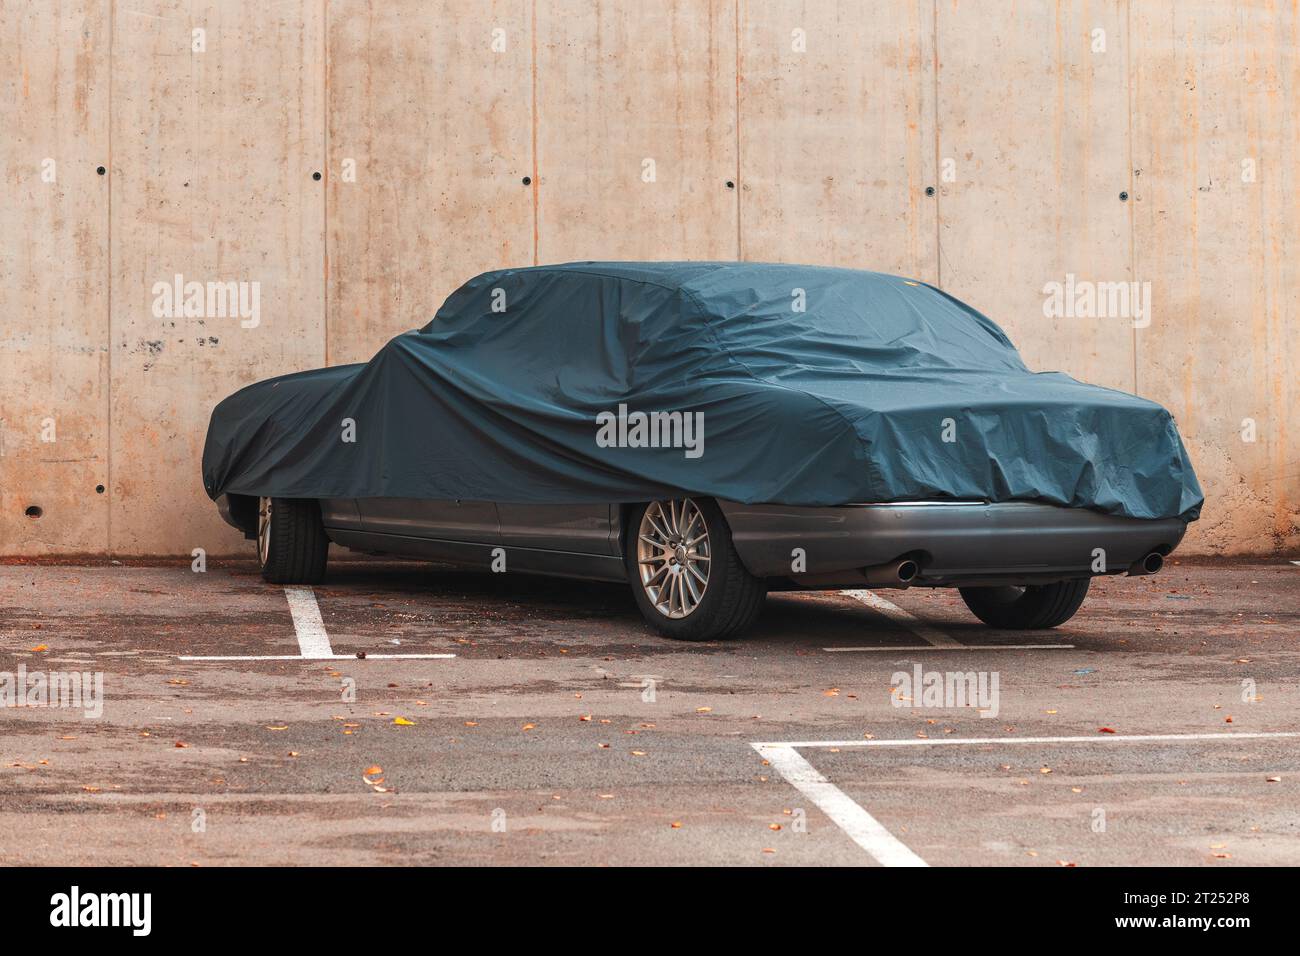 Auto auf Parkplatz mit wetterfester Abdeckung, selektiver Fokus Stockfoto